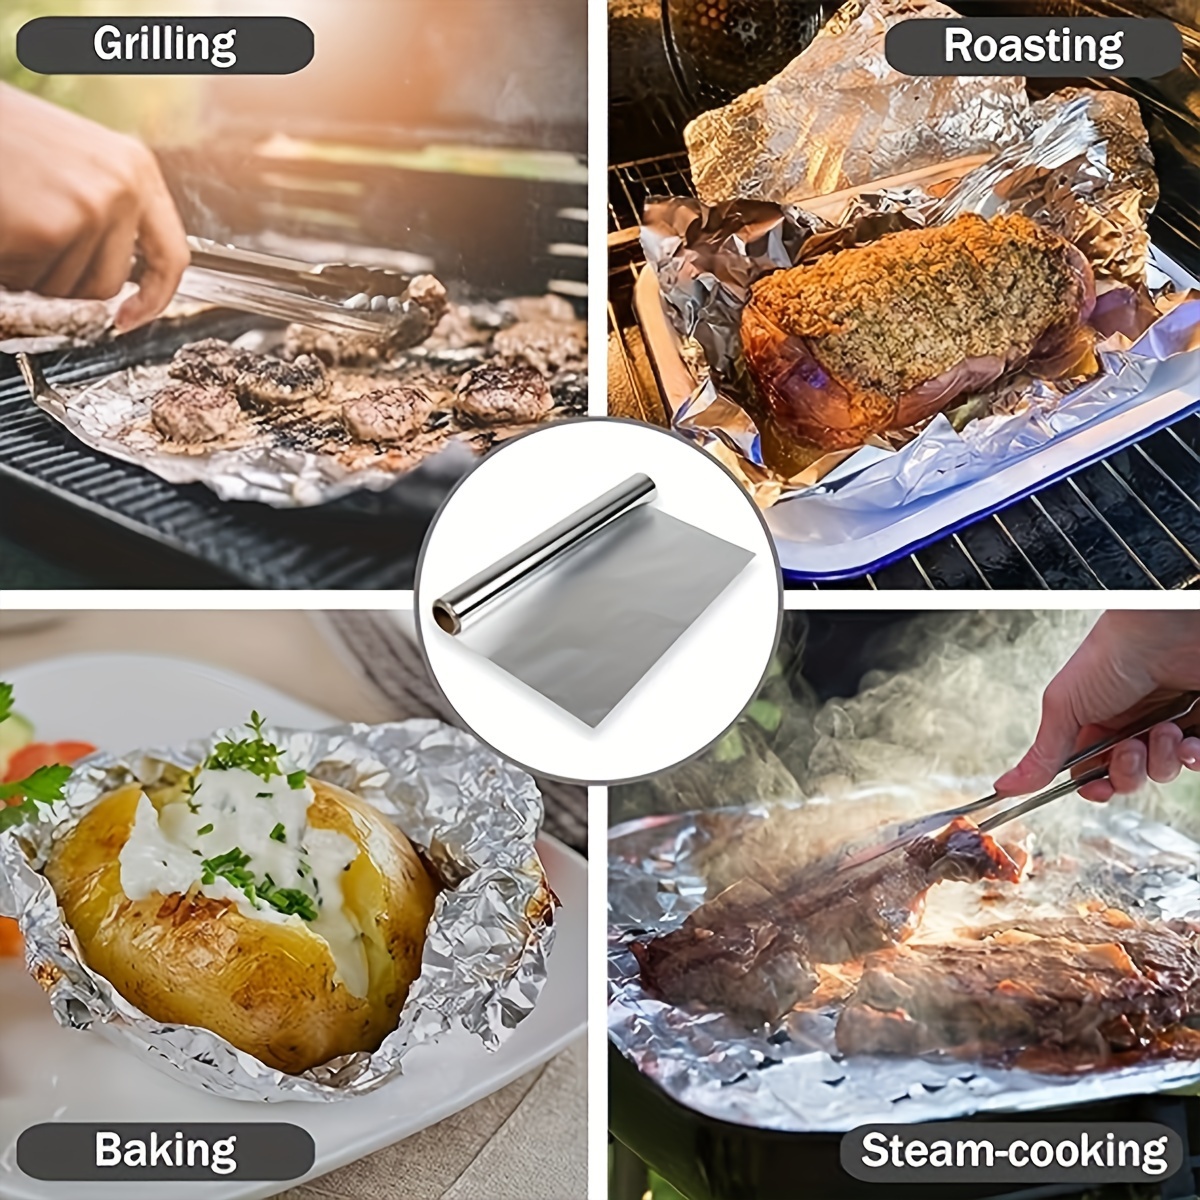 Ox Plastics Aluminum Foil Wrap for Food | Heavy Duty Aluminum Foil | BBQ  Silver Foil Rolls for Grilling, Roasting, Baking | Perfect for Commercial 